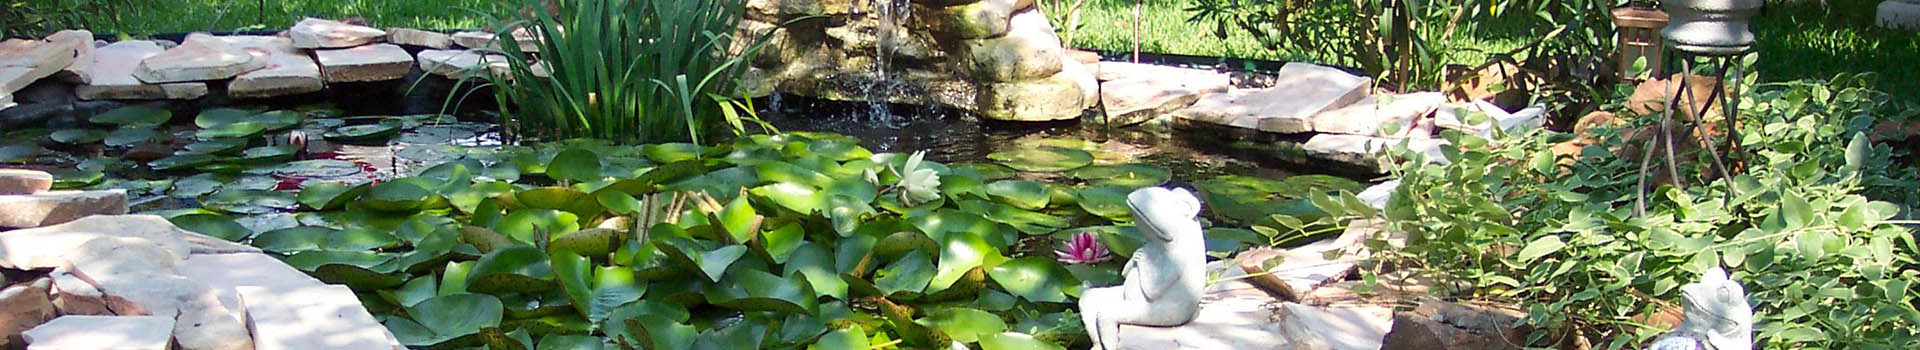 pond-holly-days-nursery-landscaping-horsham-ambler-nursery